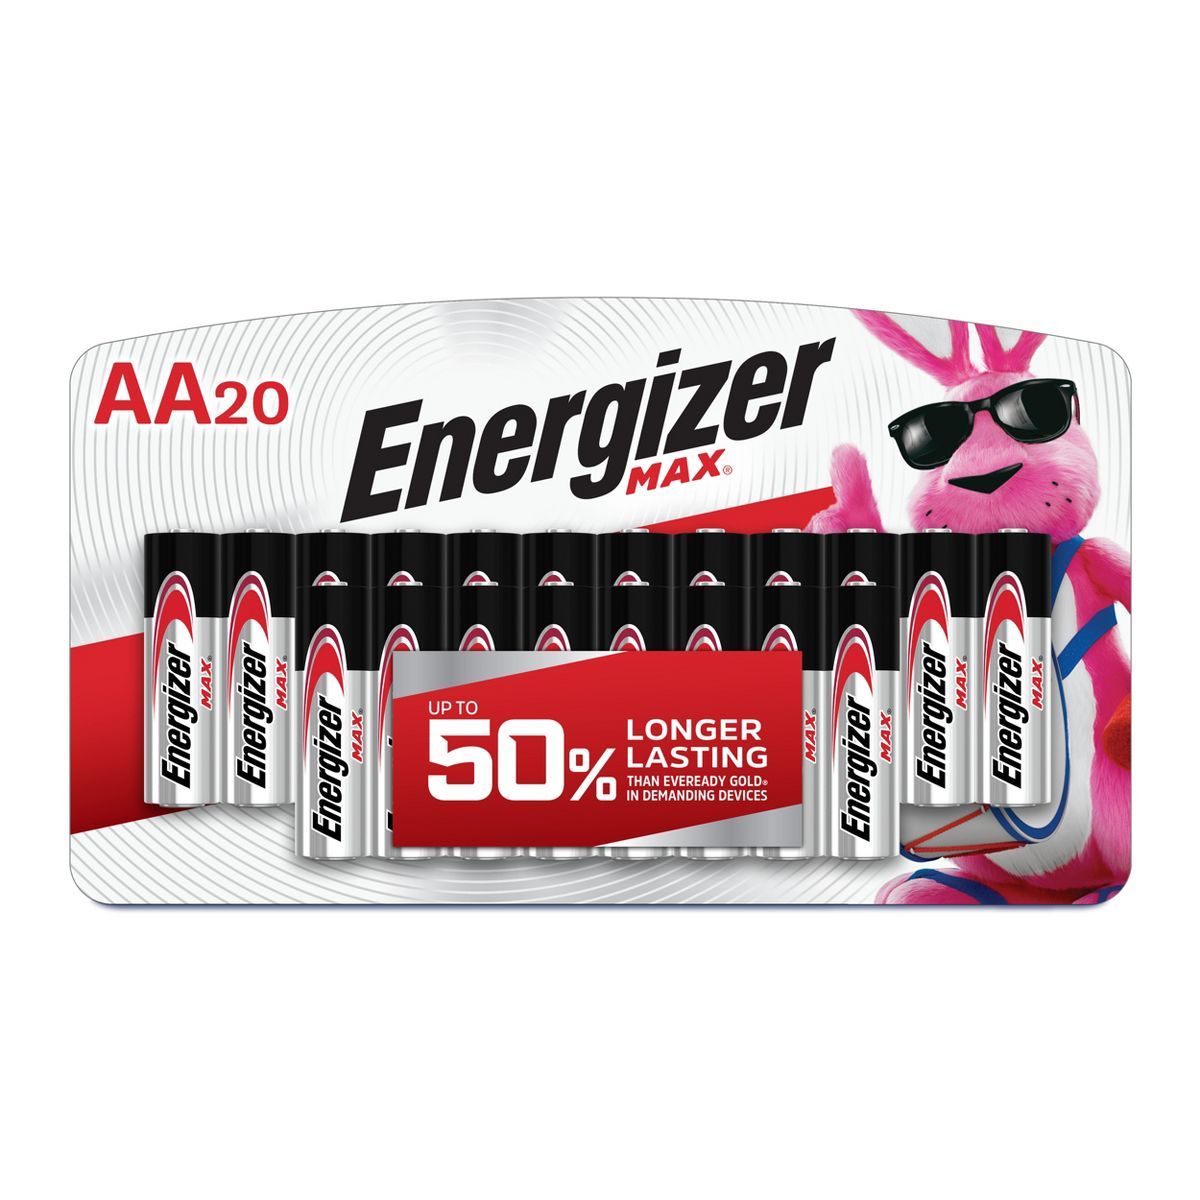 Energizer Max AA Batteries - Alkaline Battery | Target